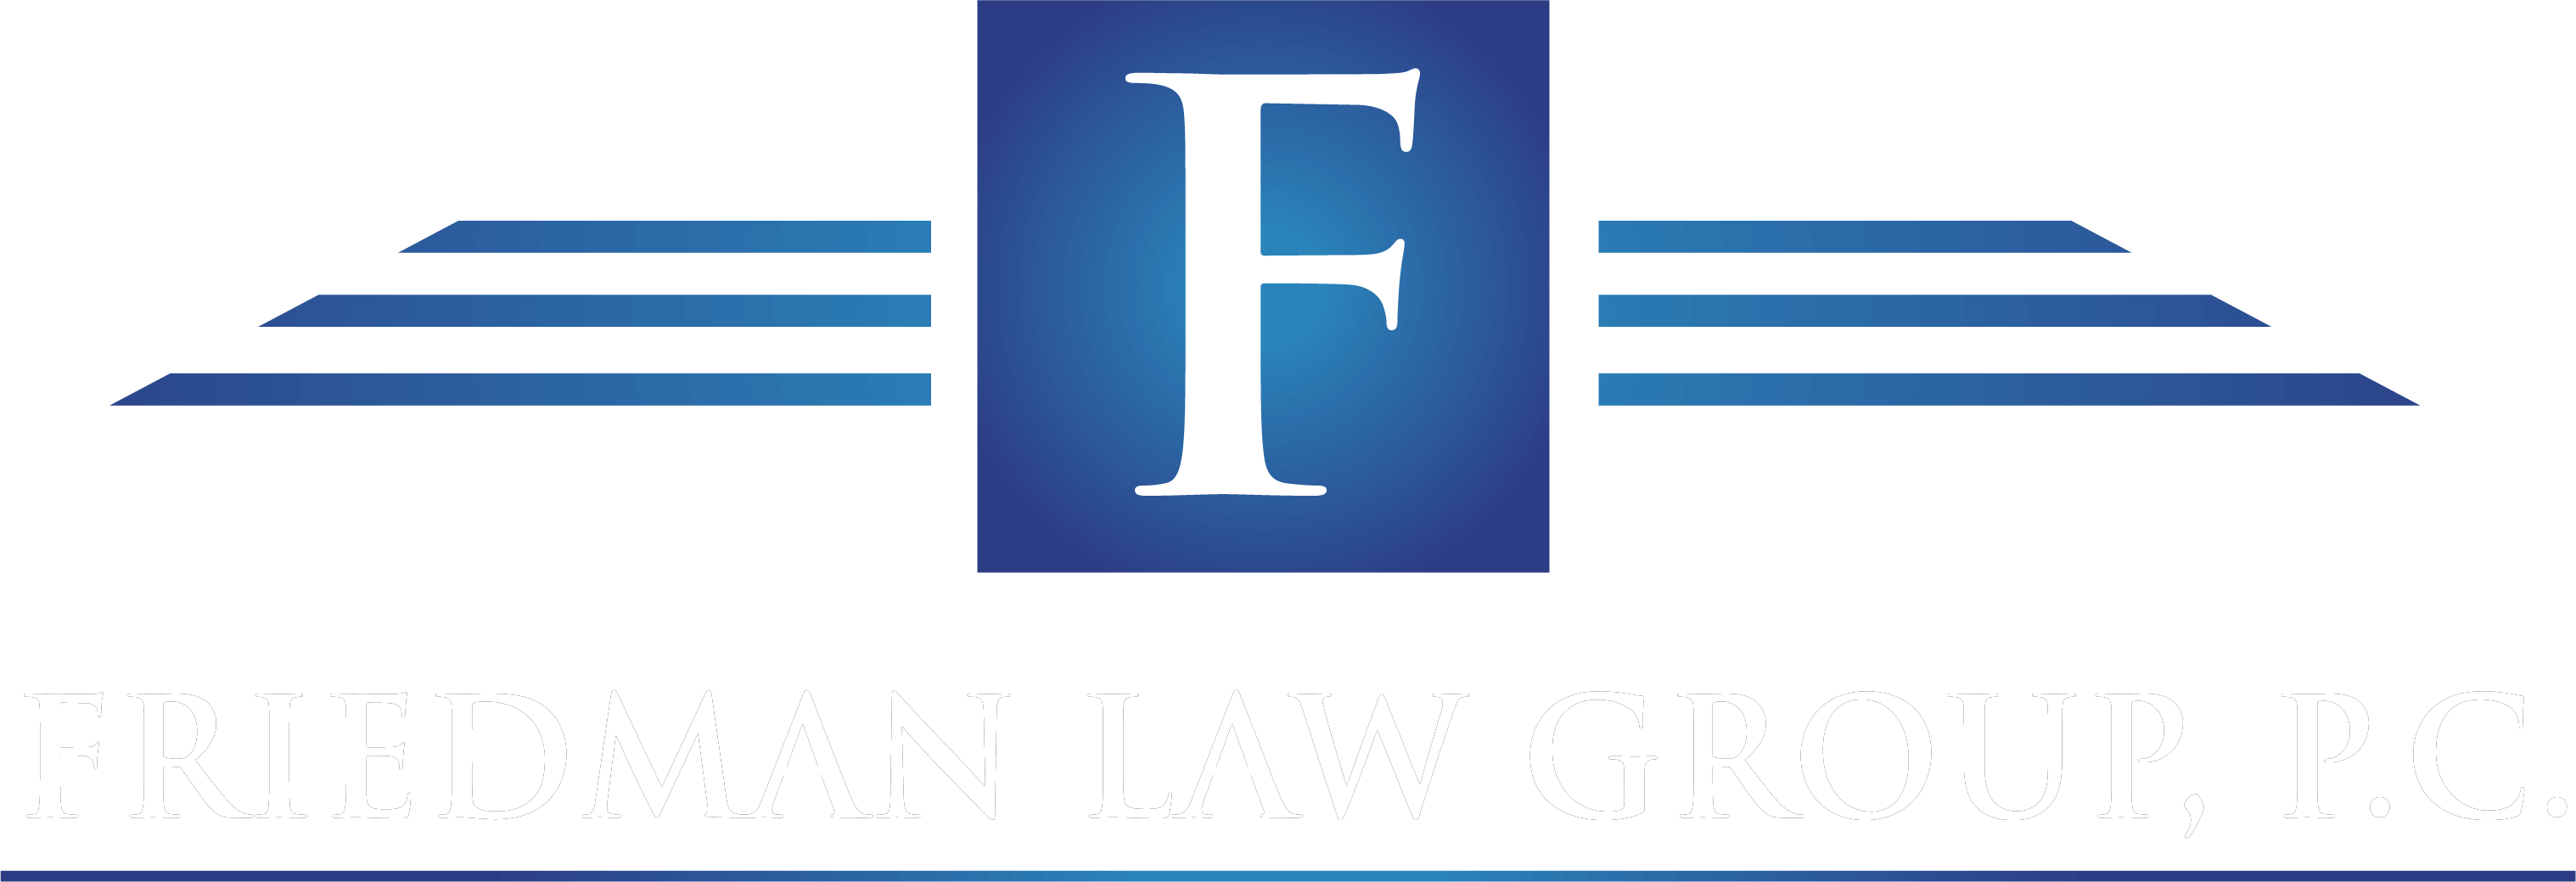 Friedman Law Group, P.C.